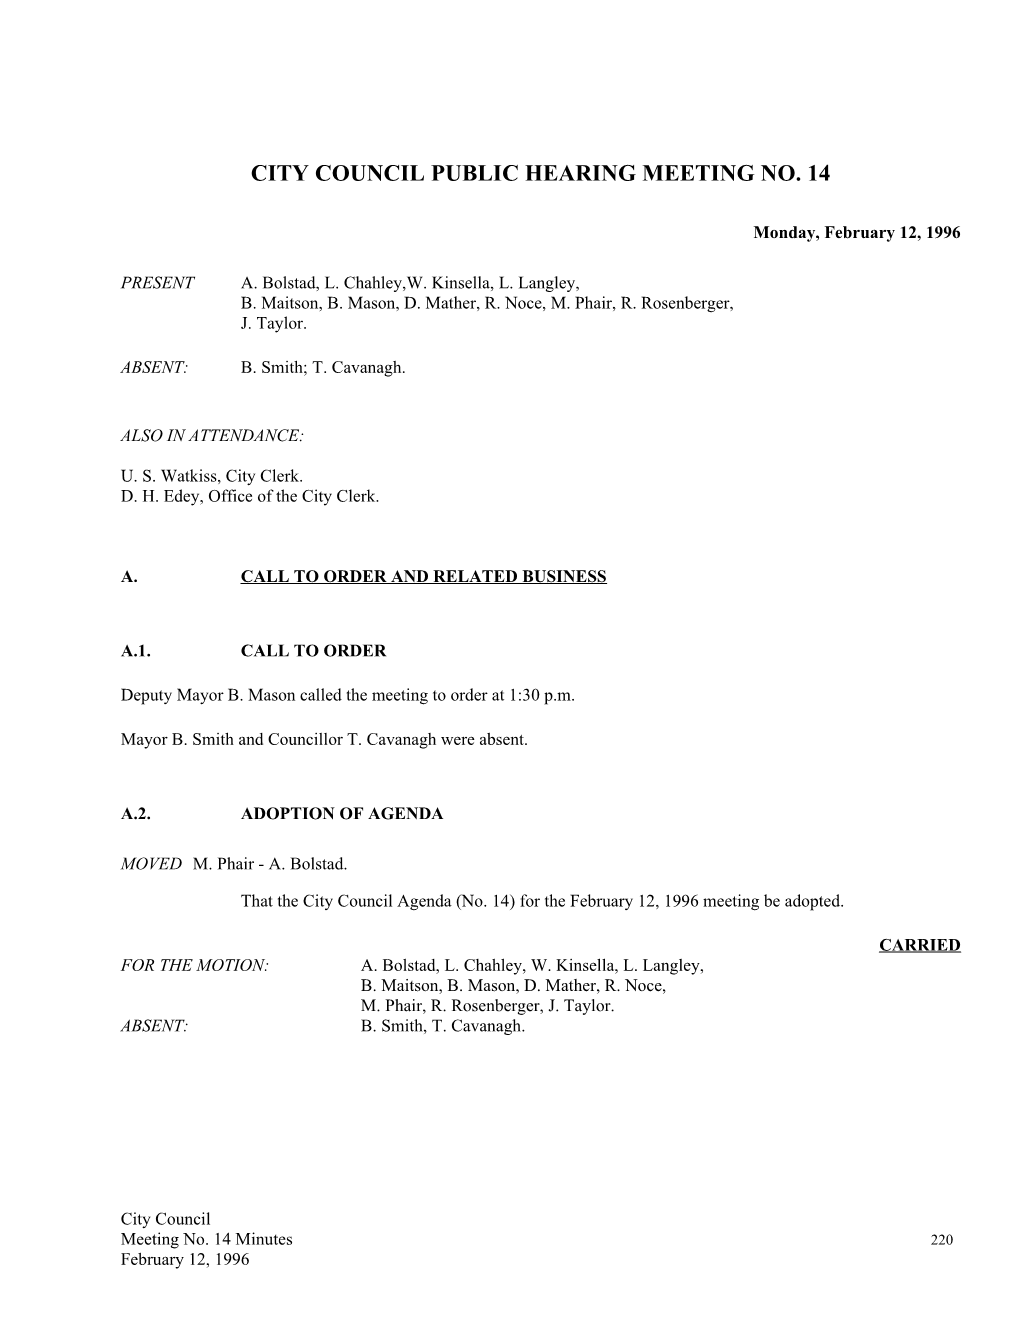 City Council Public Hearing Meeting No. 14